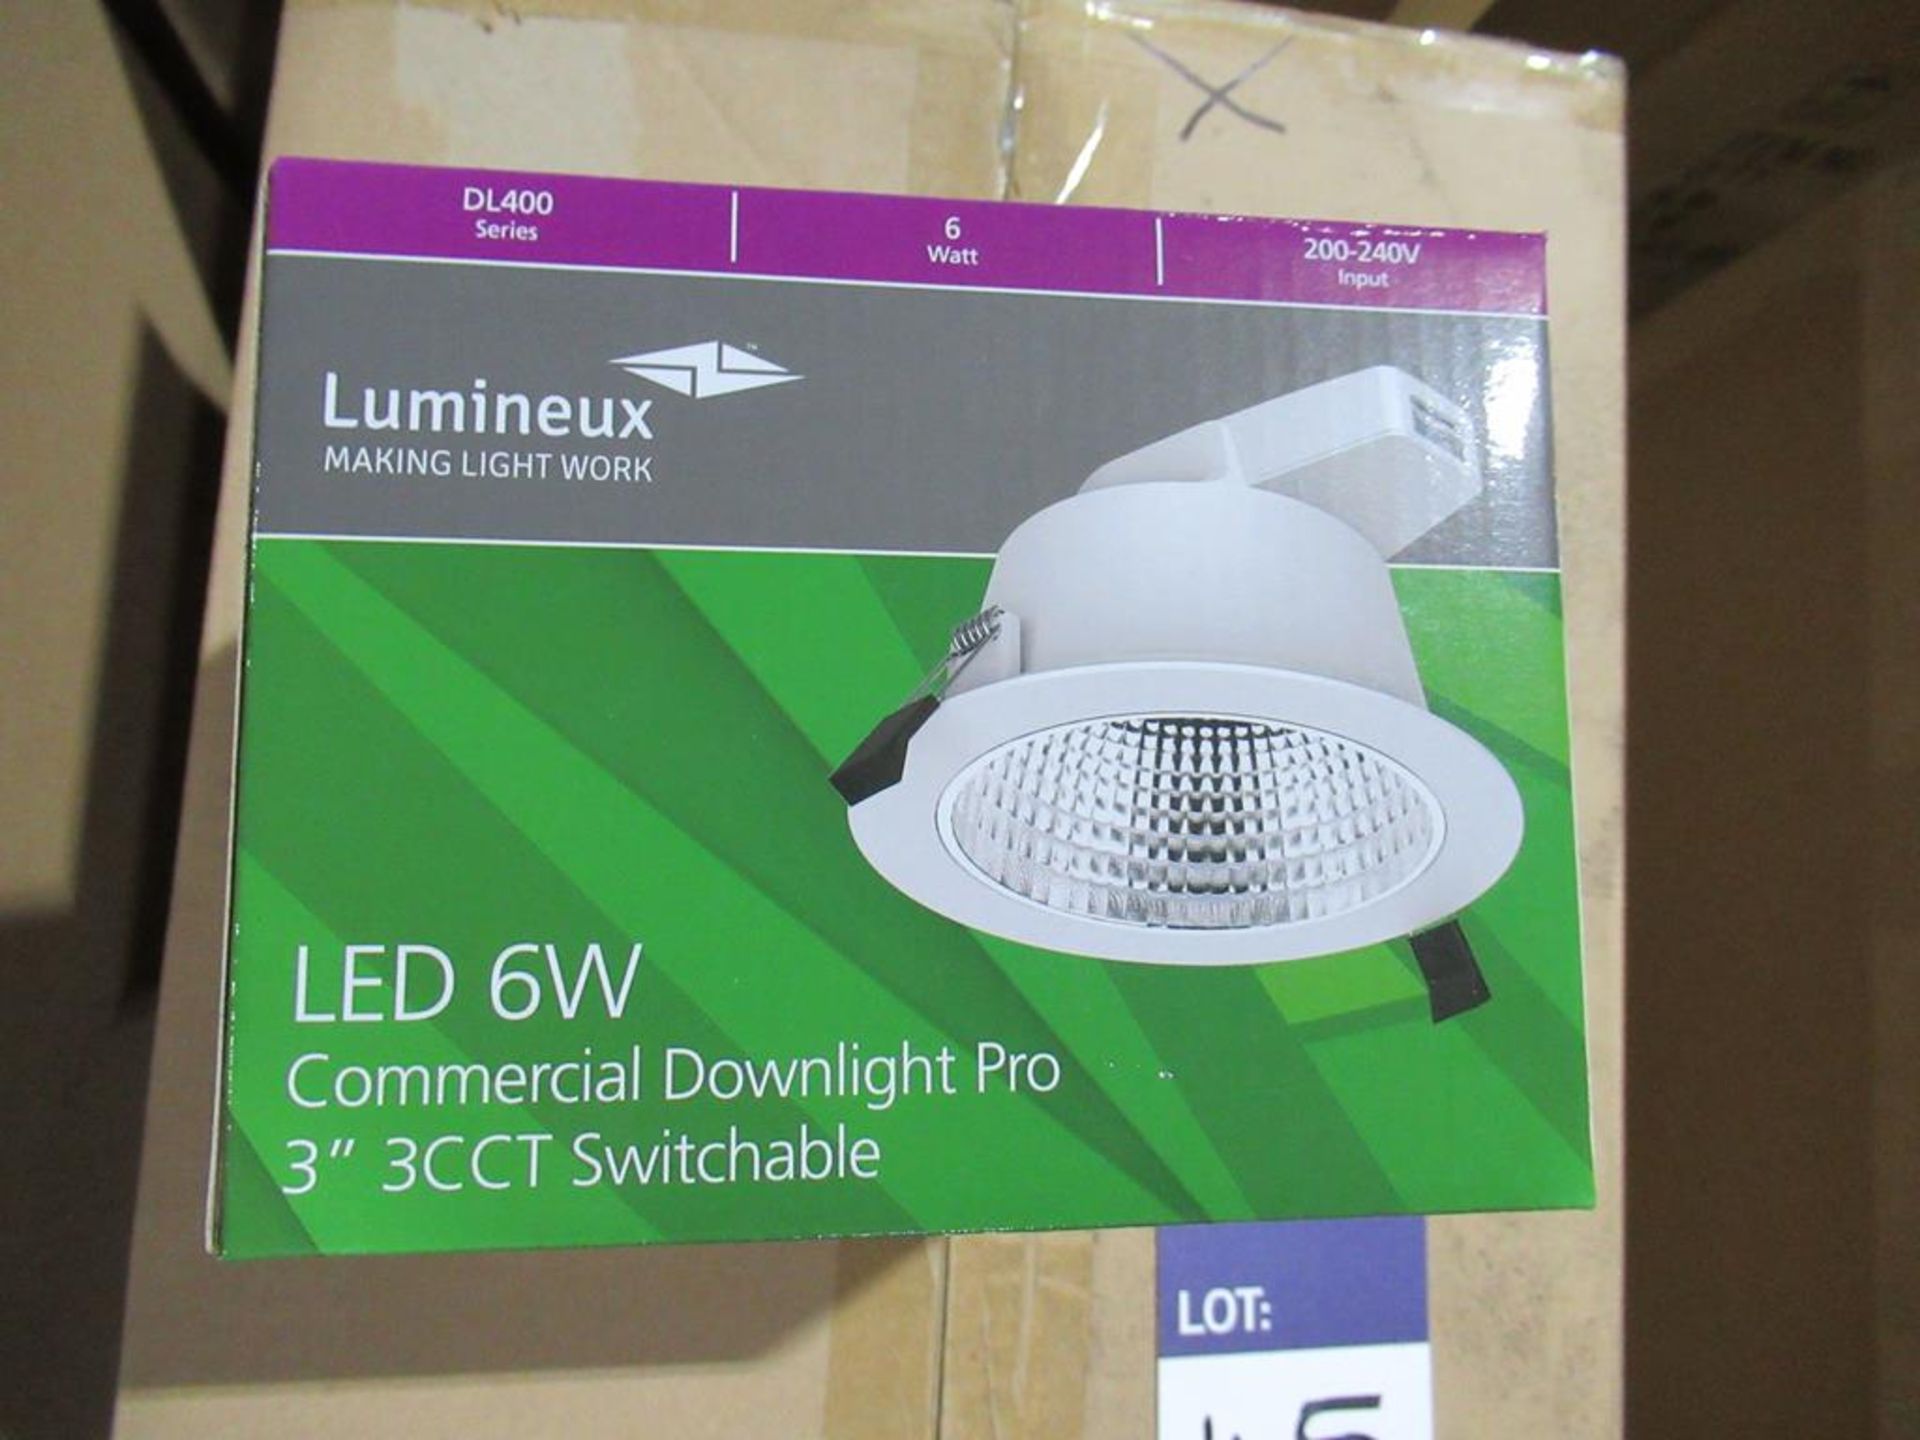 24 x Lumineux LED 6W Decorative Downlight Pro 3" 3CCT Switchable 200/240v OEM Trade Price £360